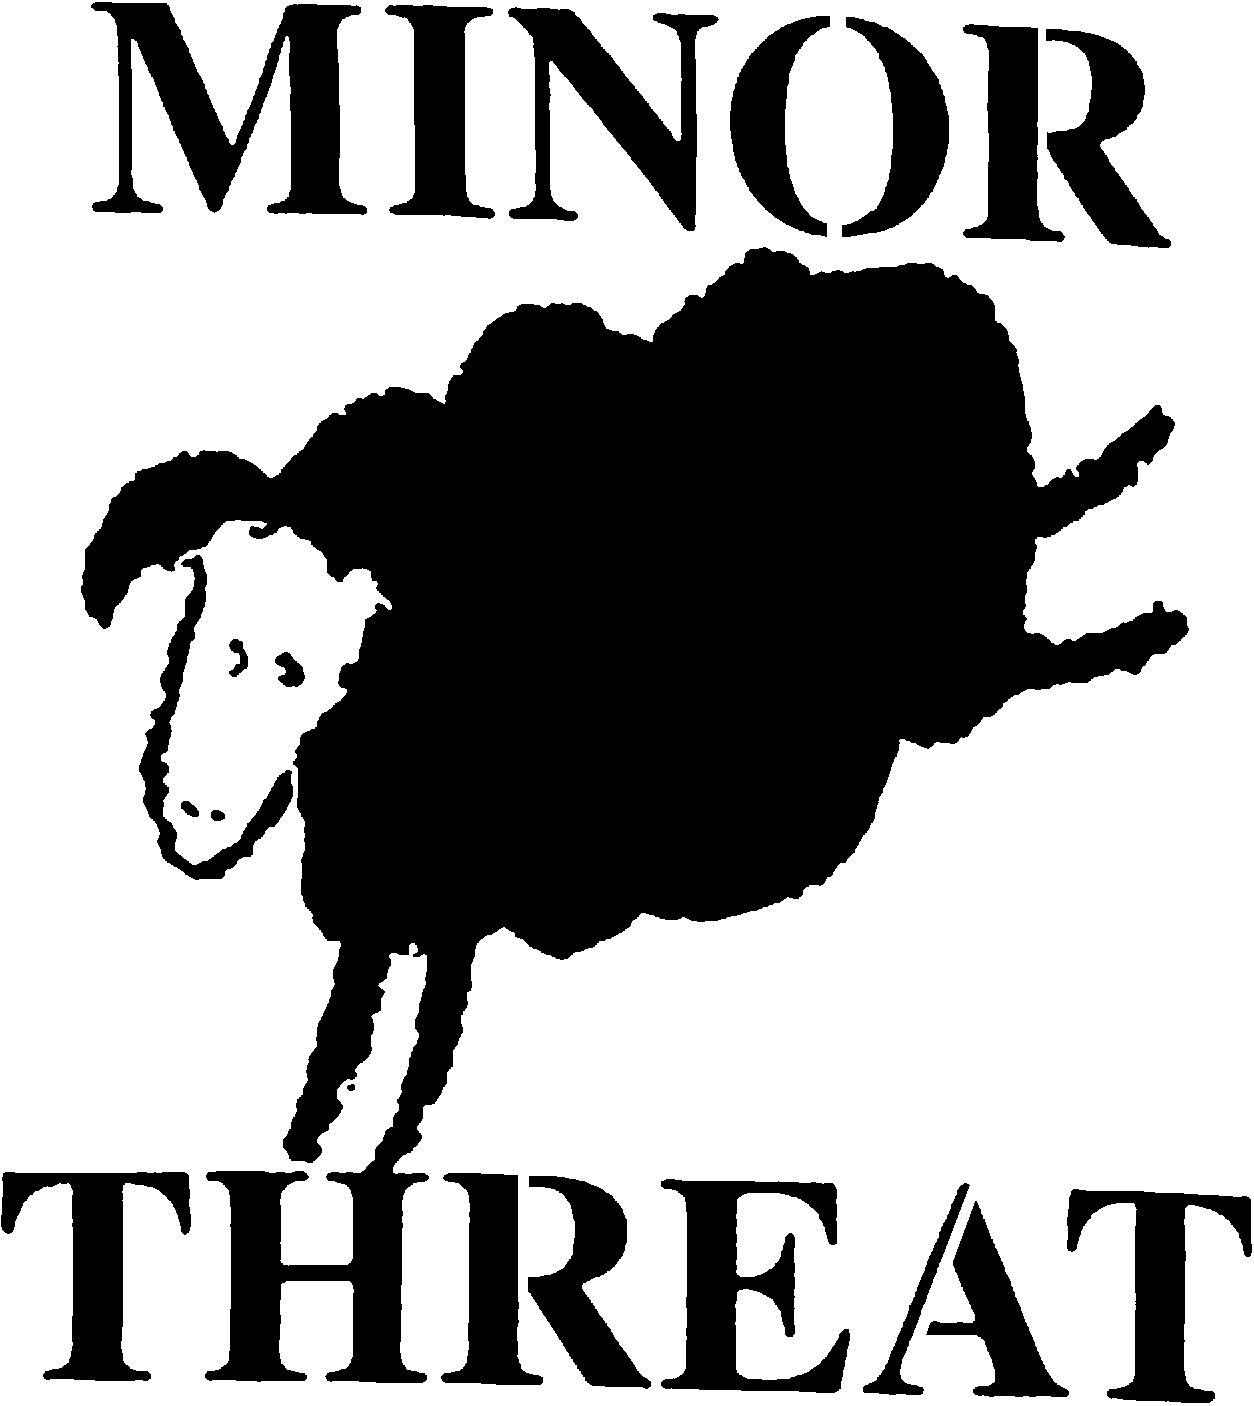 Minor Threat Logo